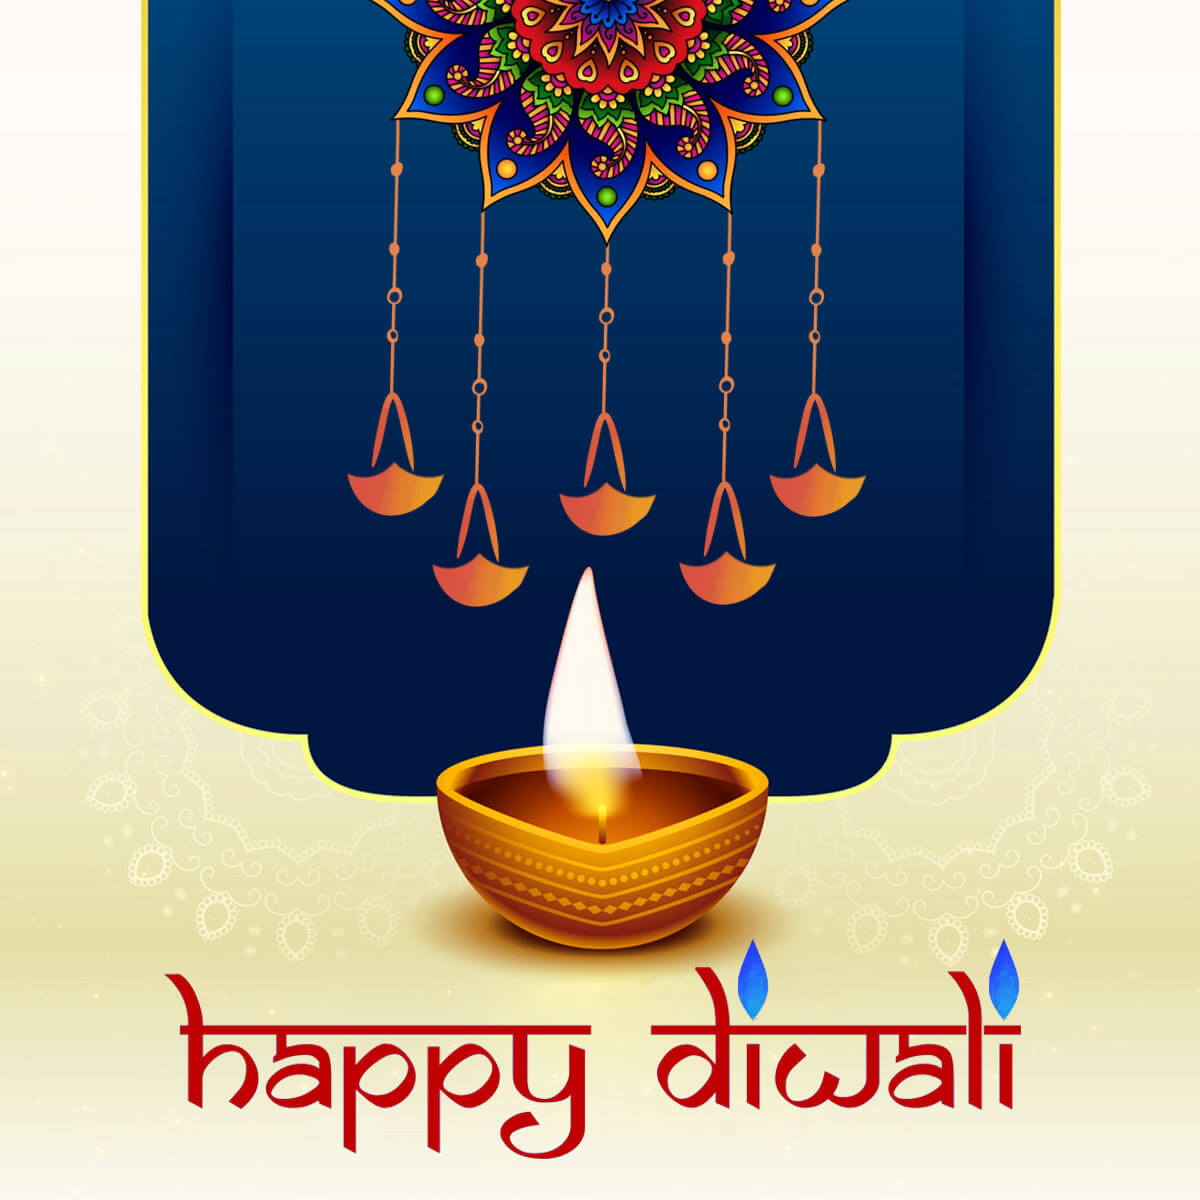 Happy diwali banner indian lights festival vector image - Pngfreepic